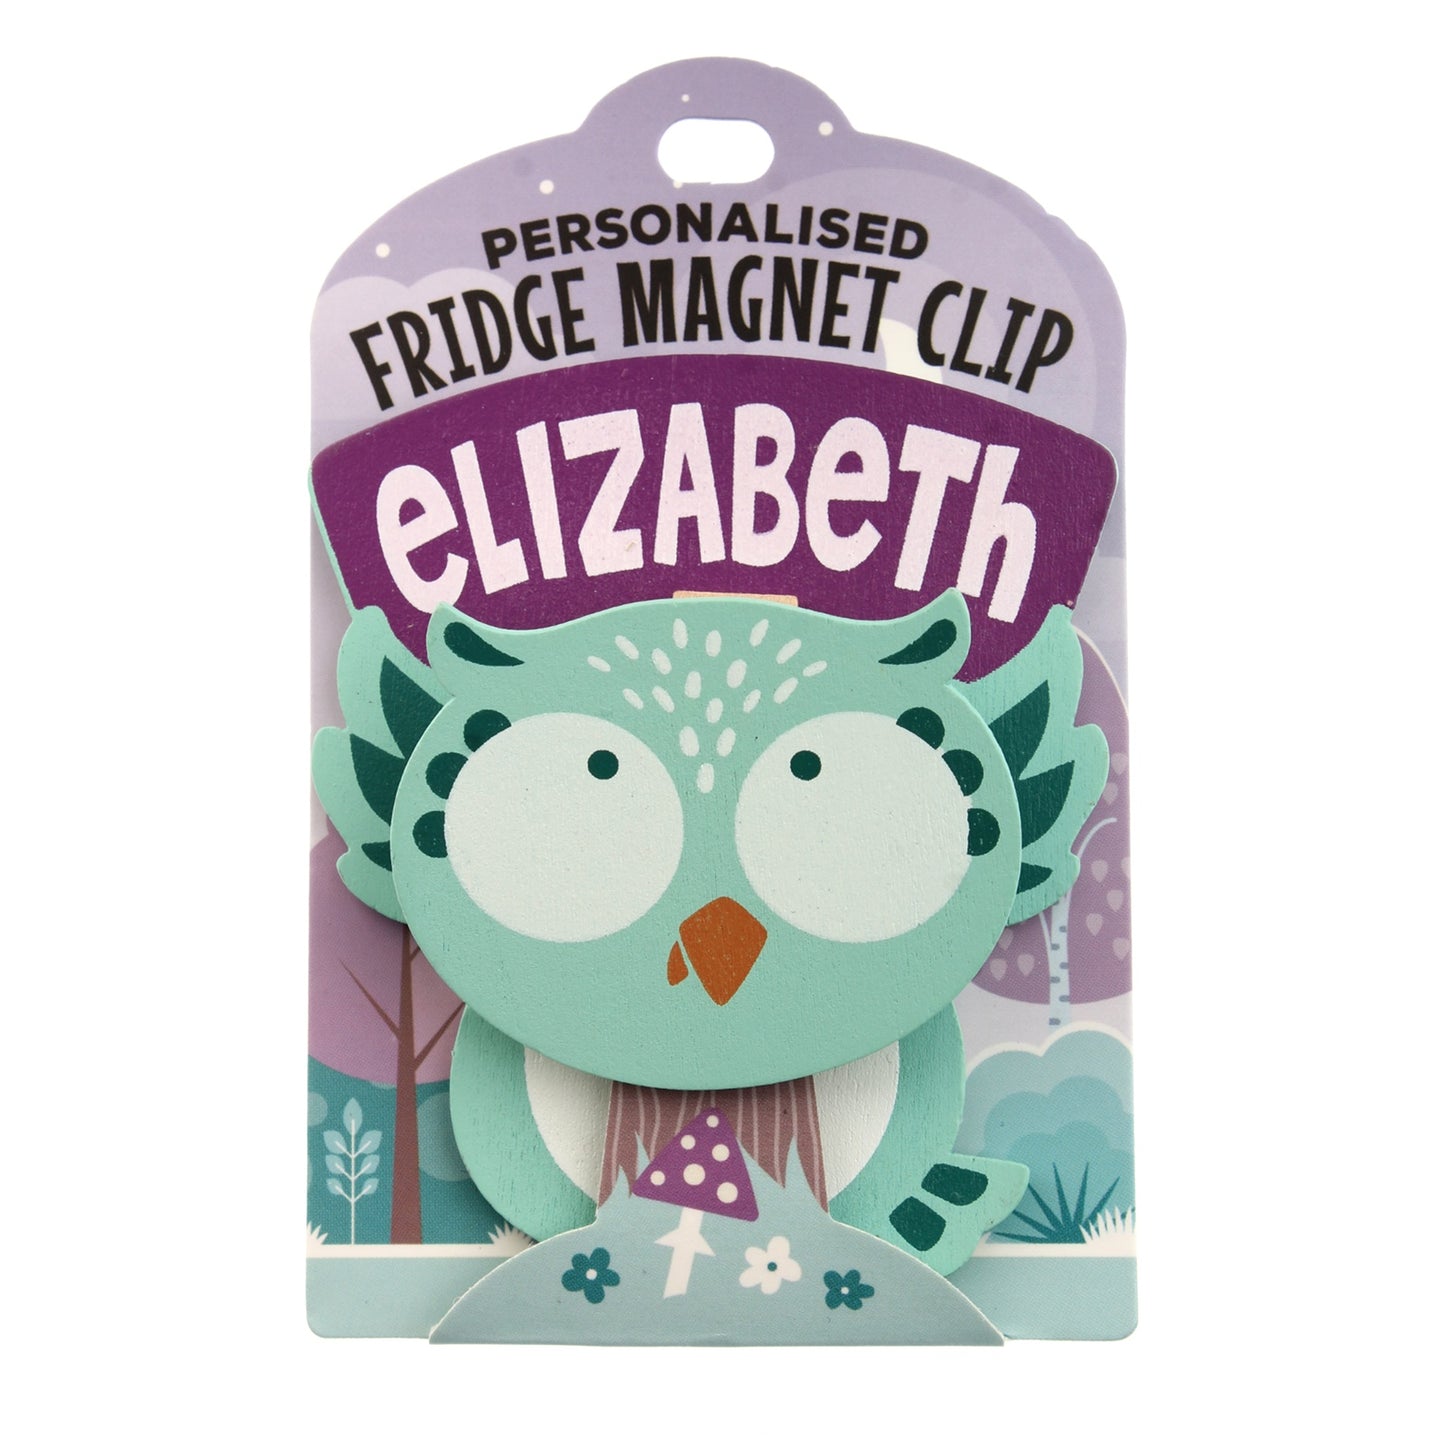 Fridge Magnet Clip Elizabeth